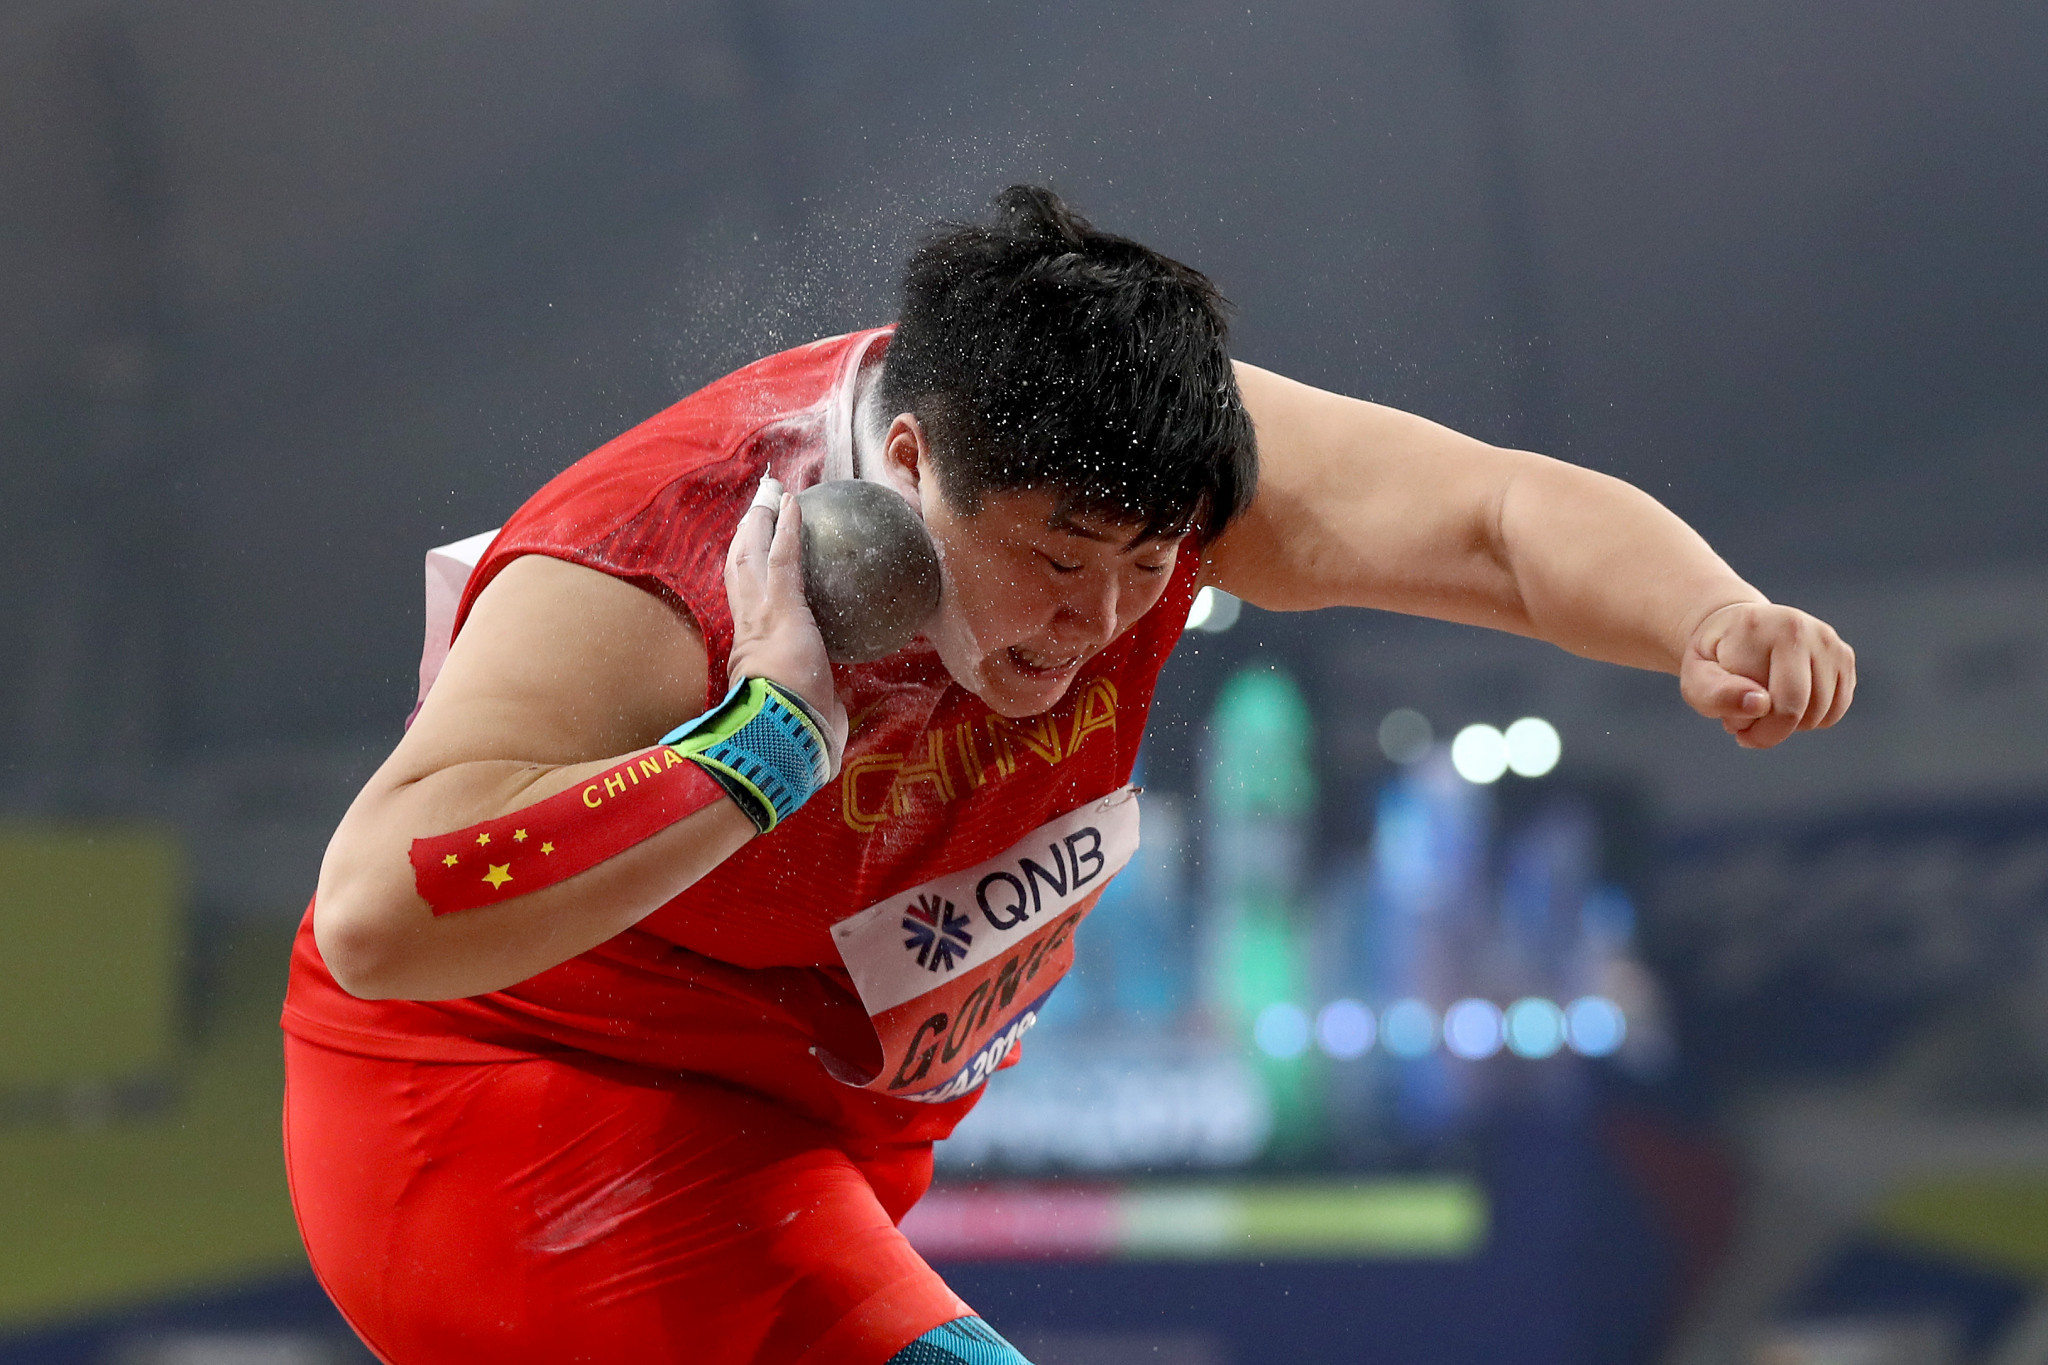 Gong aiming for Olympic shot put gold despite postponement of Tokyo 2020